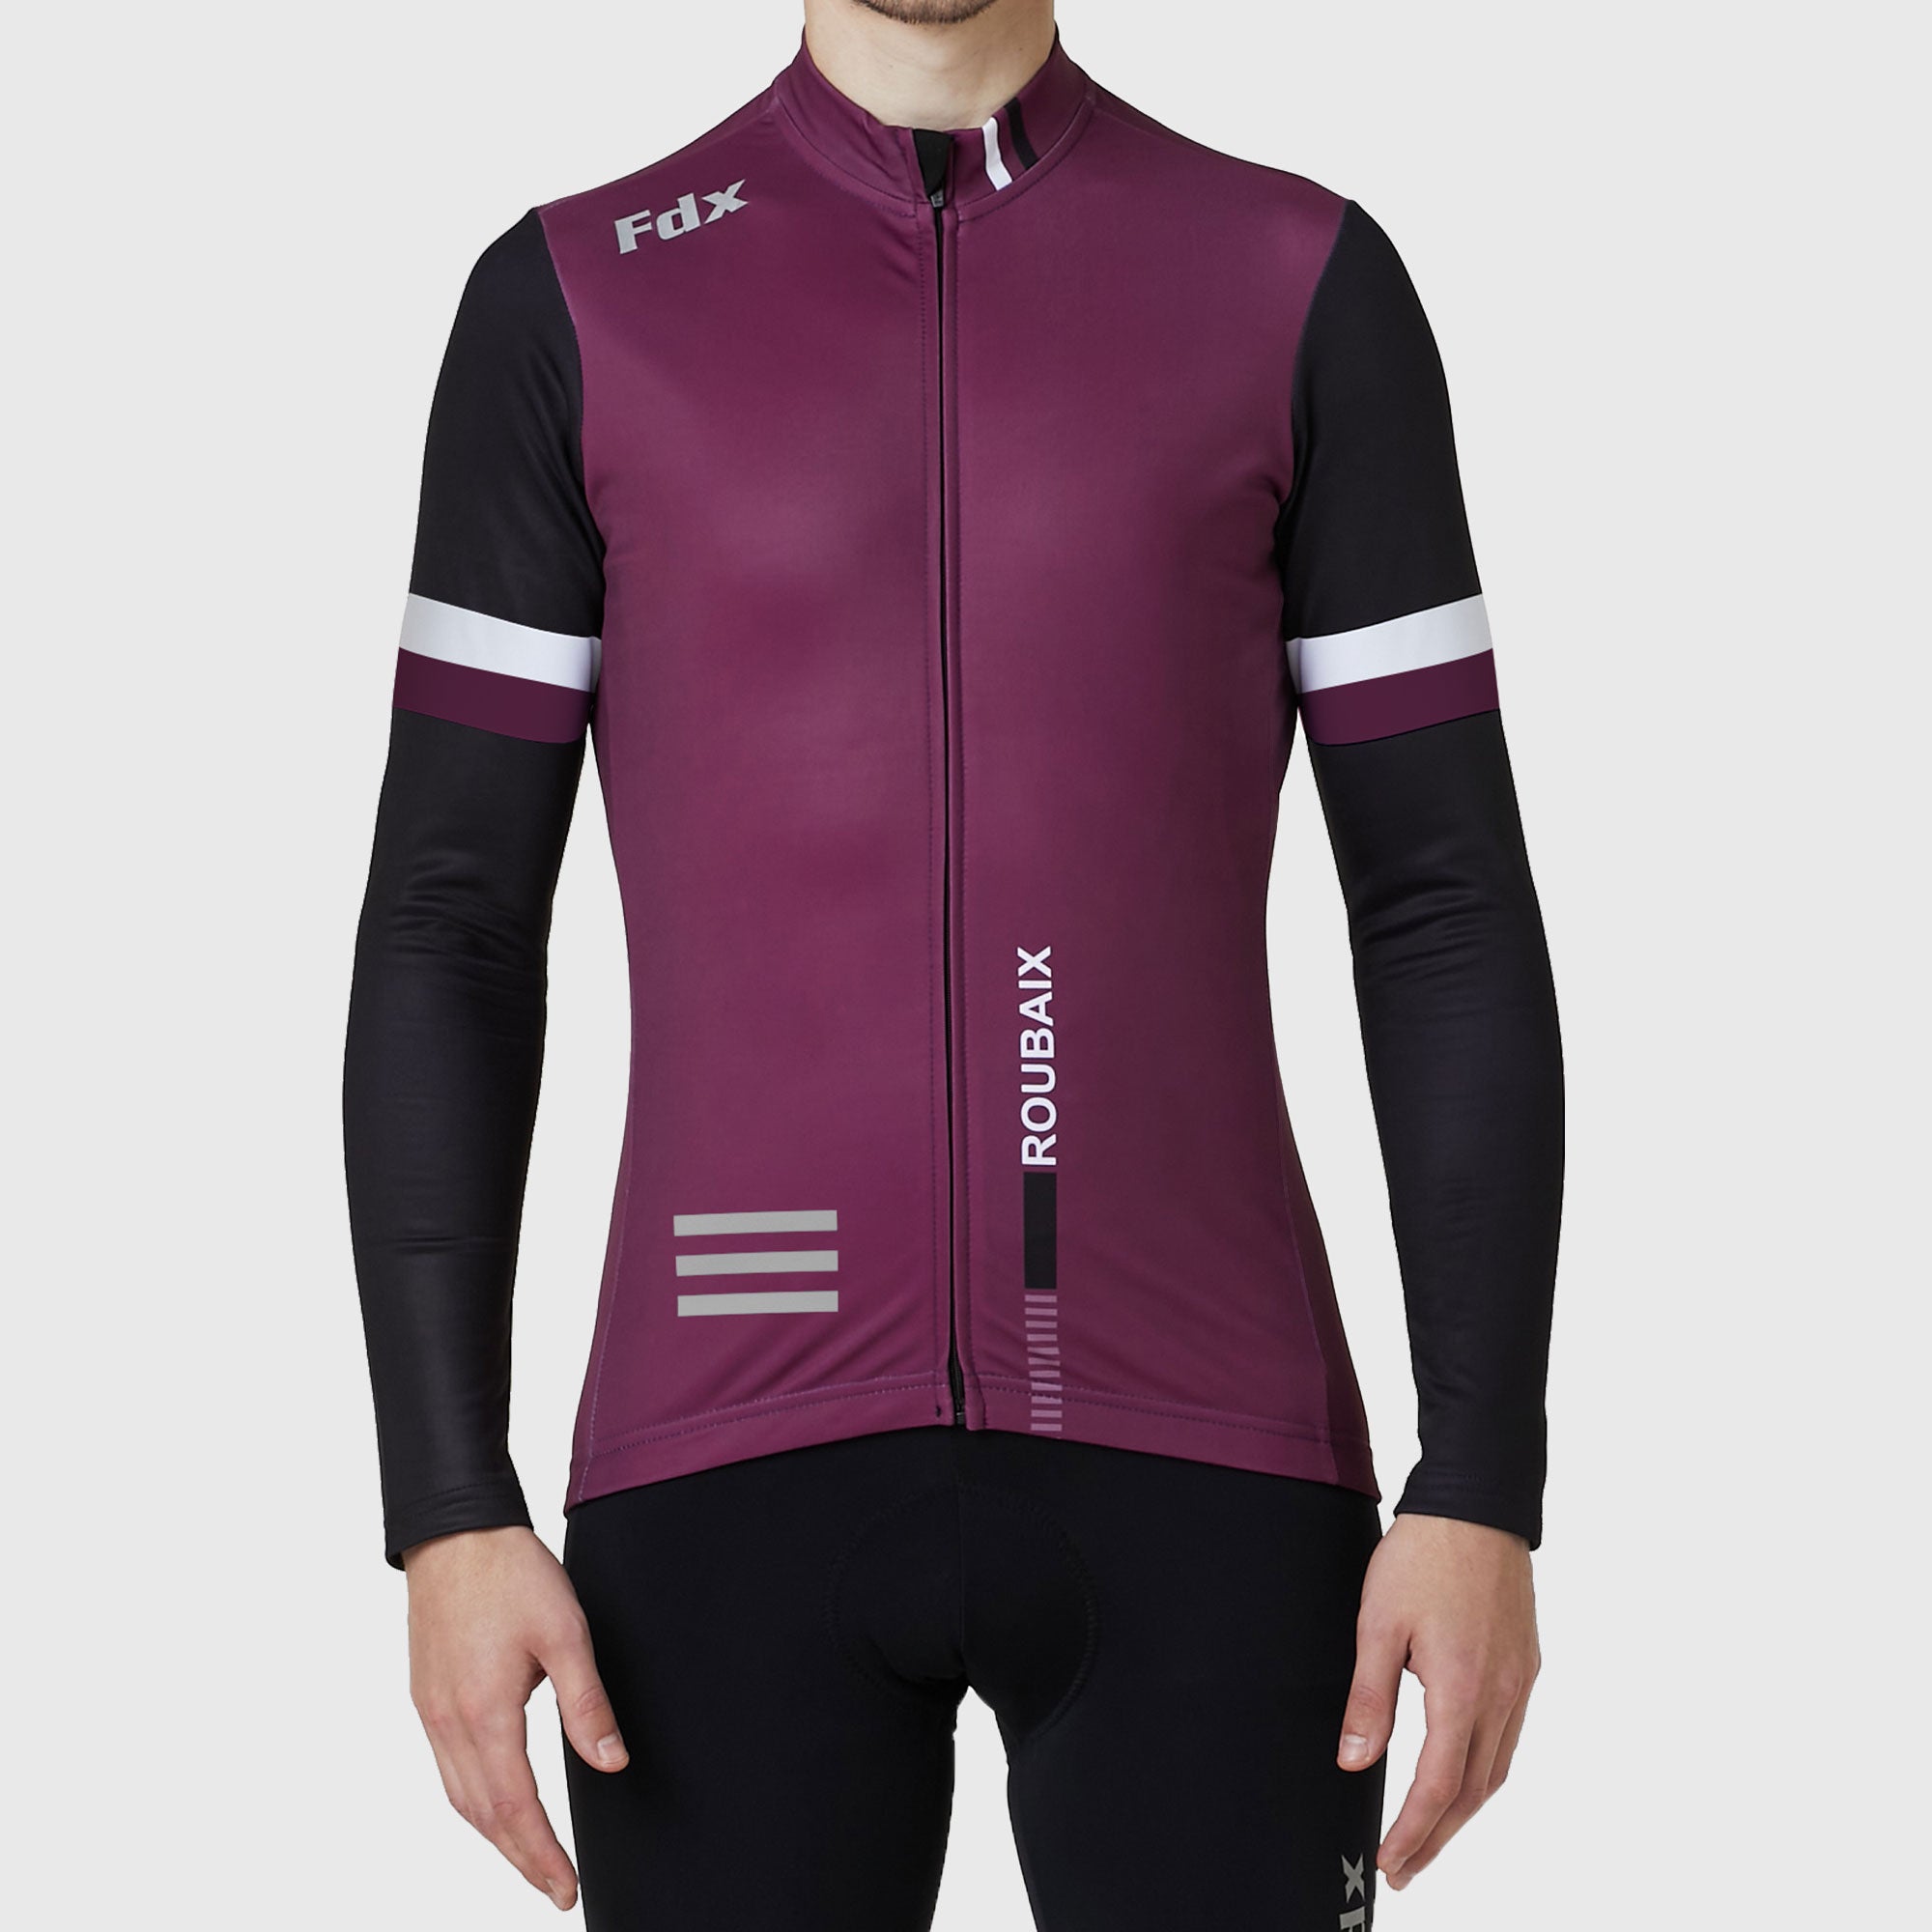 Fdx Mens Purple Long Sleeve Cycling Jersey for Winter Roubaix Thermal Fleece Road Bike Wear Top Full Zipper, Pockets & Hi-viz Reflectors - Limited Edition